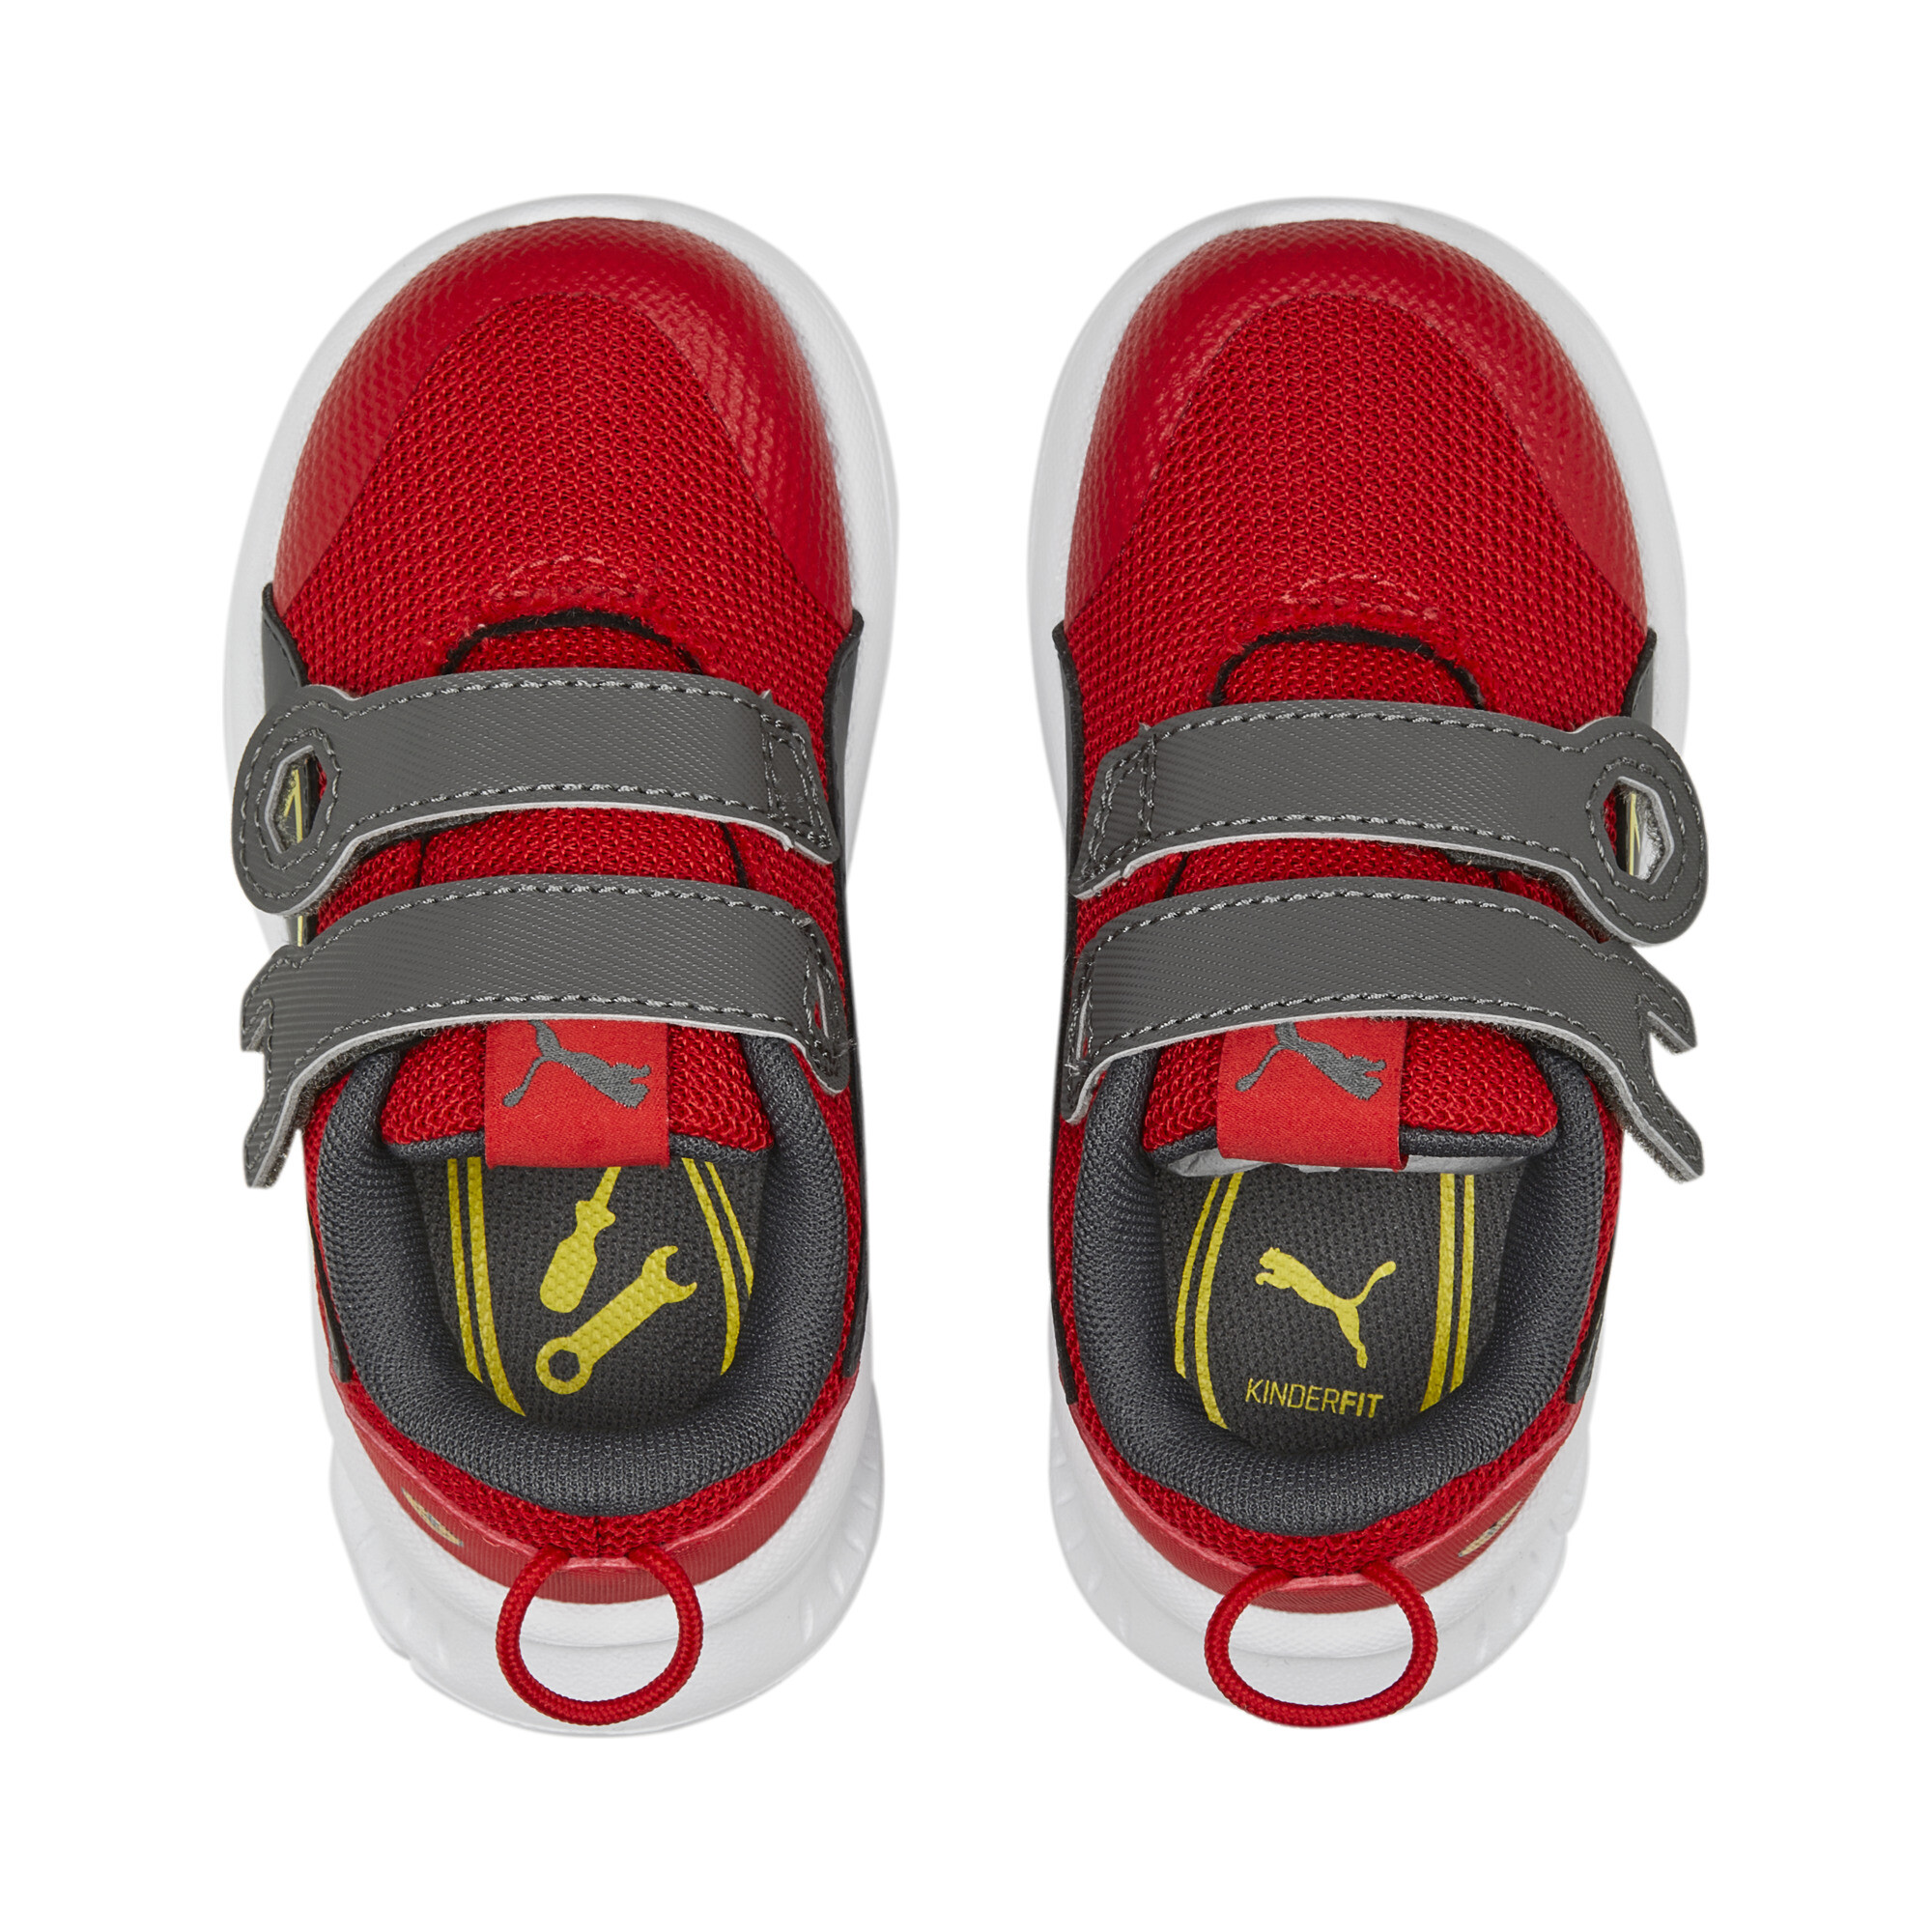 Puma Scuderia Ferrari Evolve PTC V Motorsport Shoes Babies, Red, Size 22, Shoes